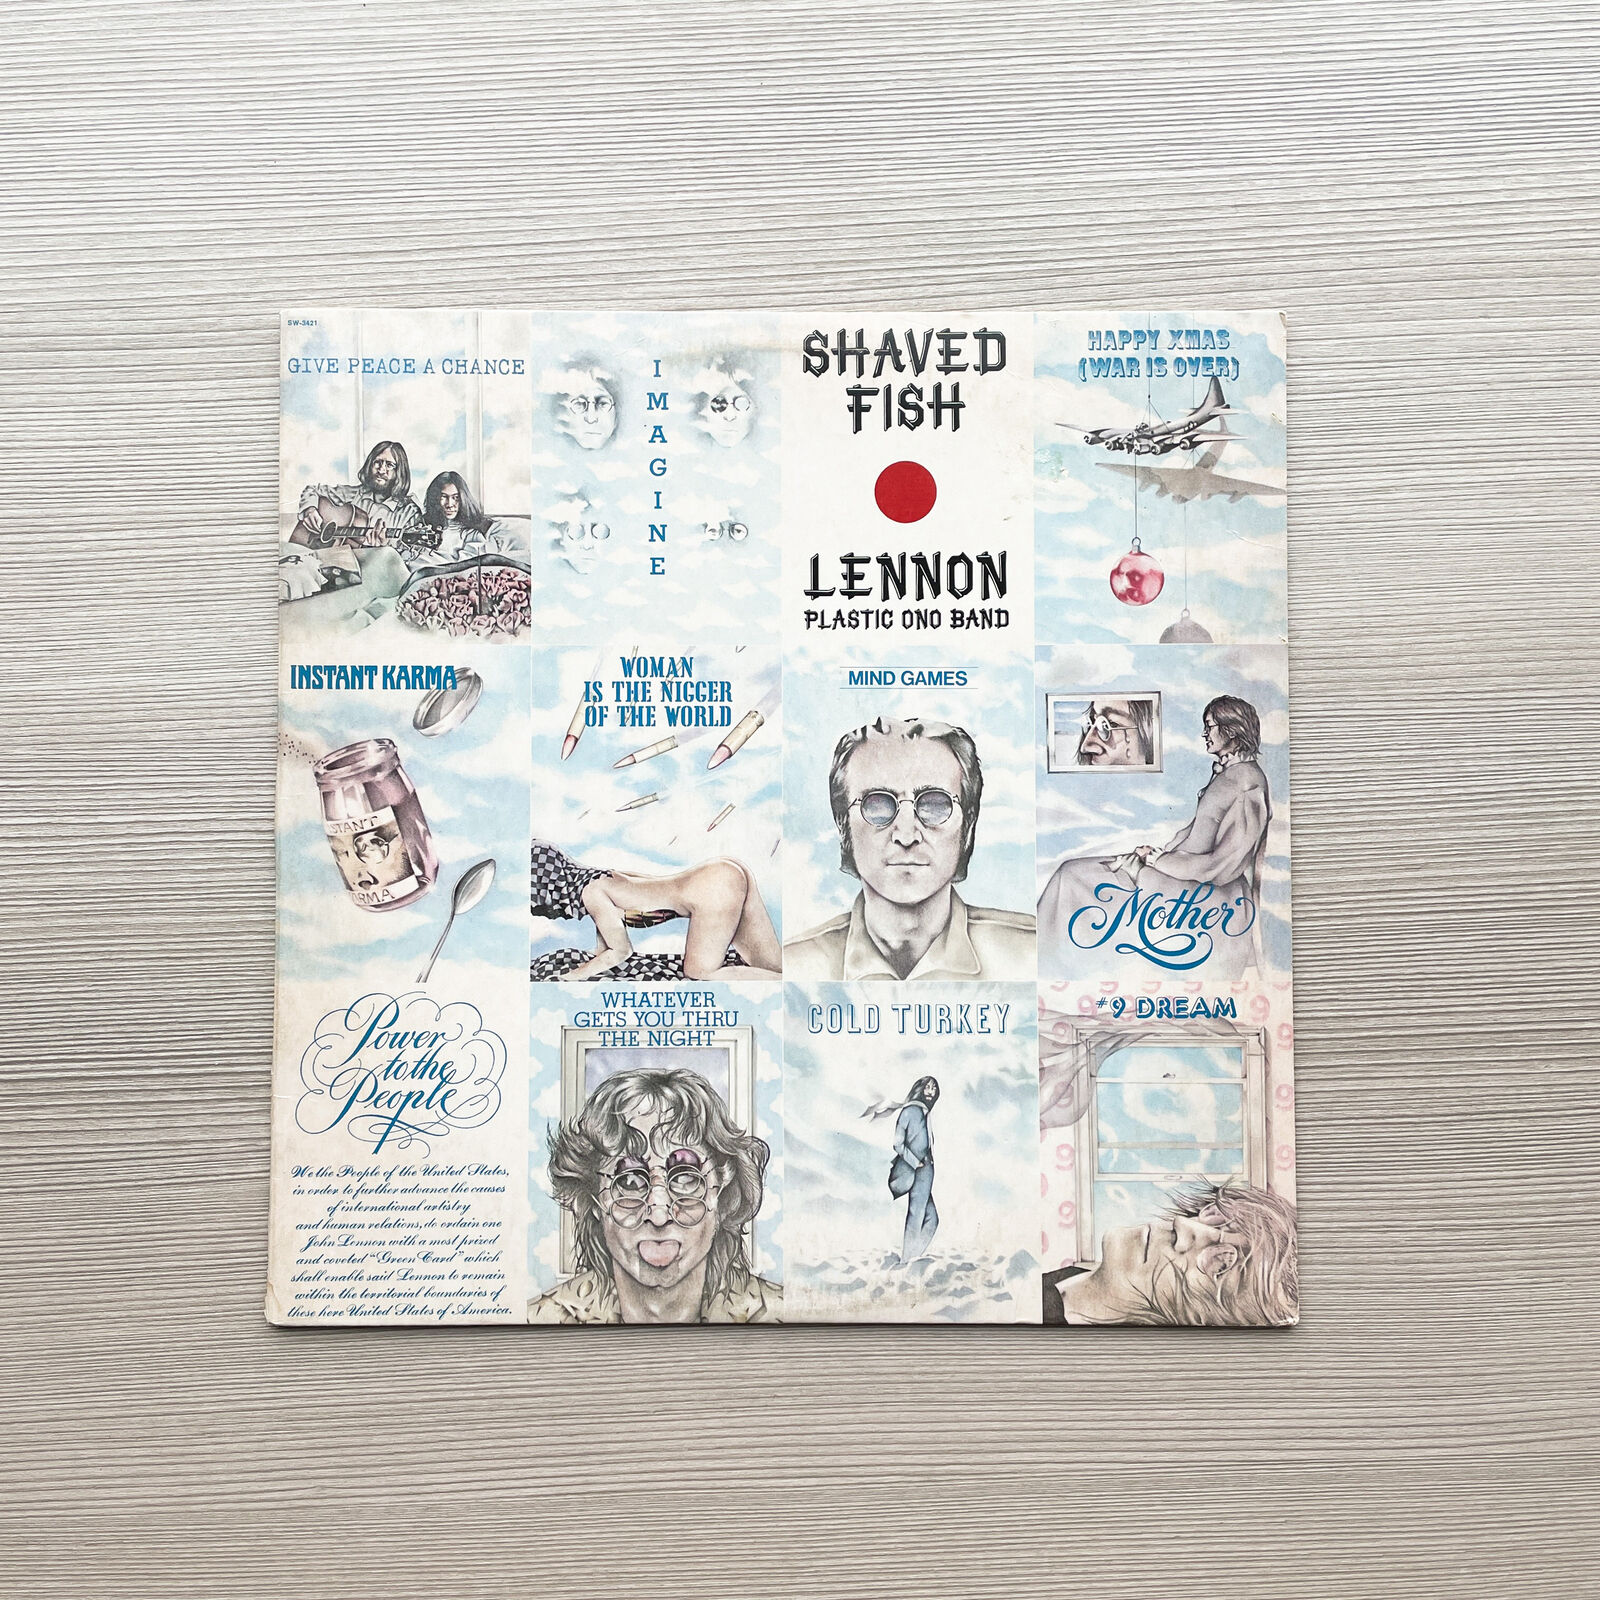 John Lennon and Plastic Ono Band - Shaved Fish - Vinyl LP Record - 1975